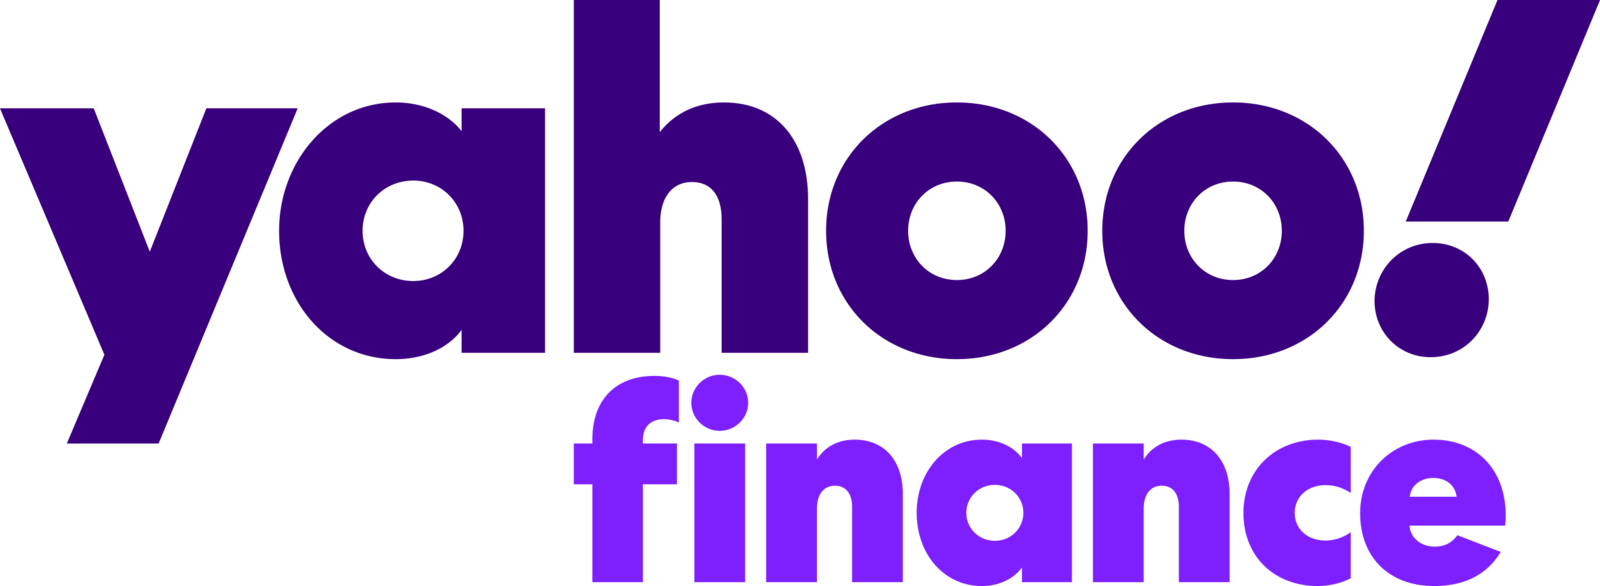 How to scrape Yahoo finance